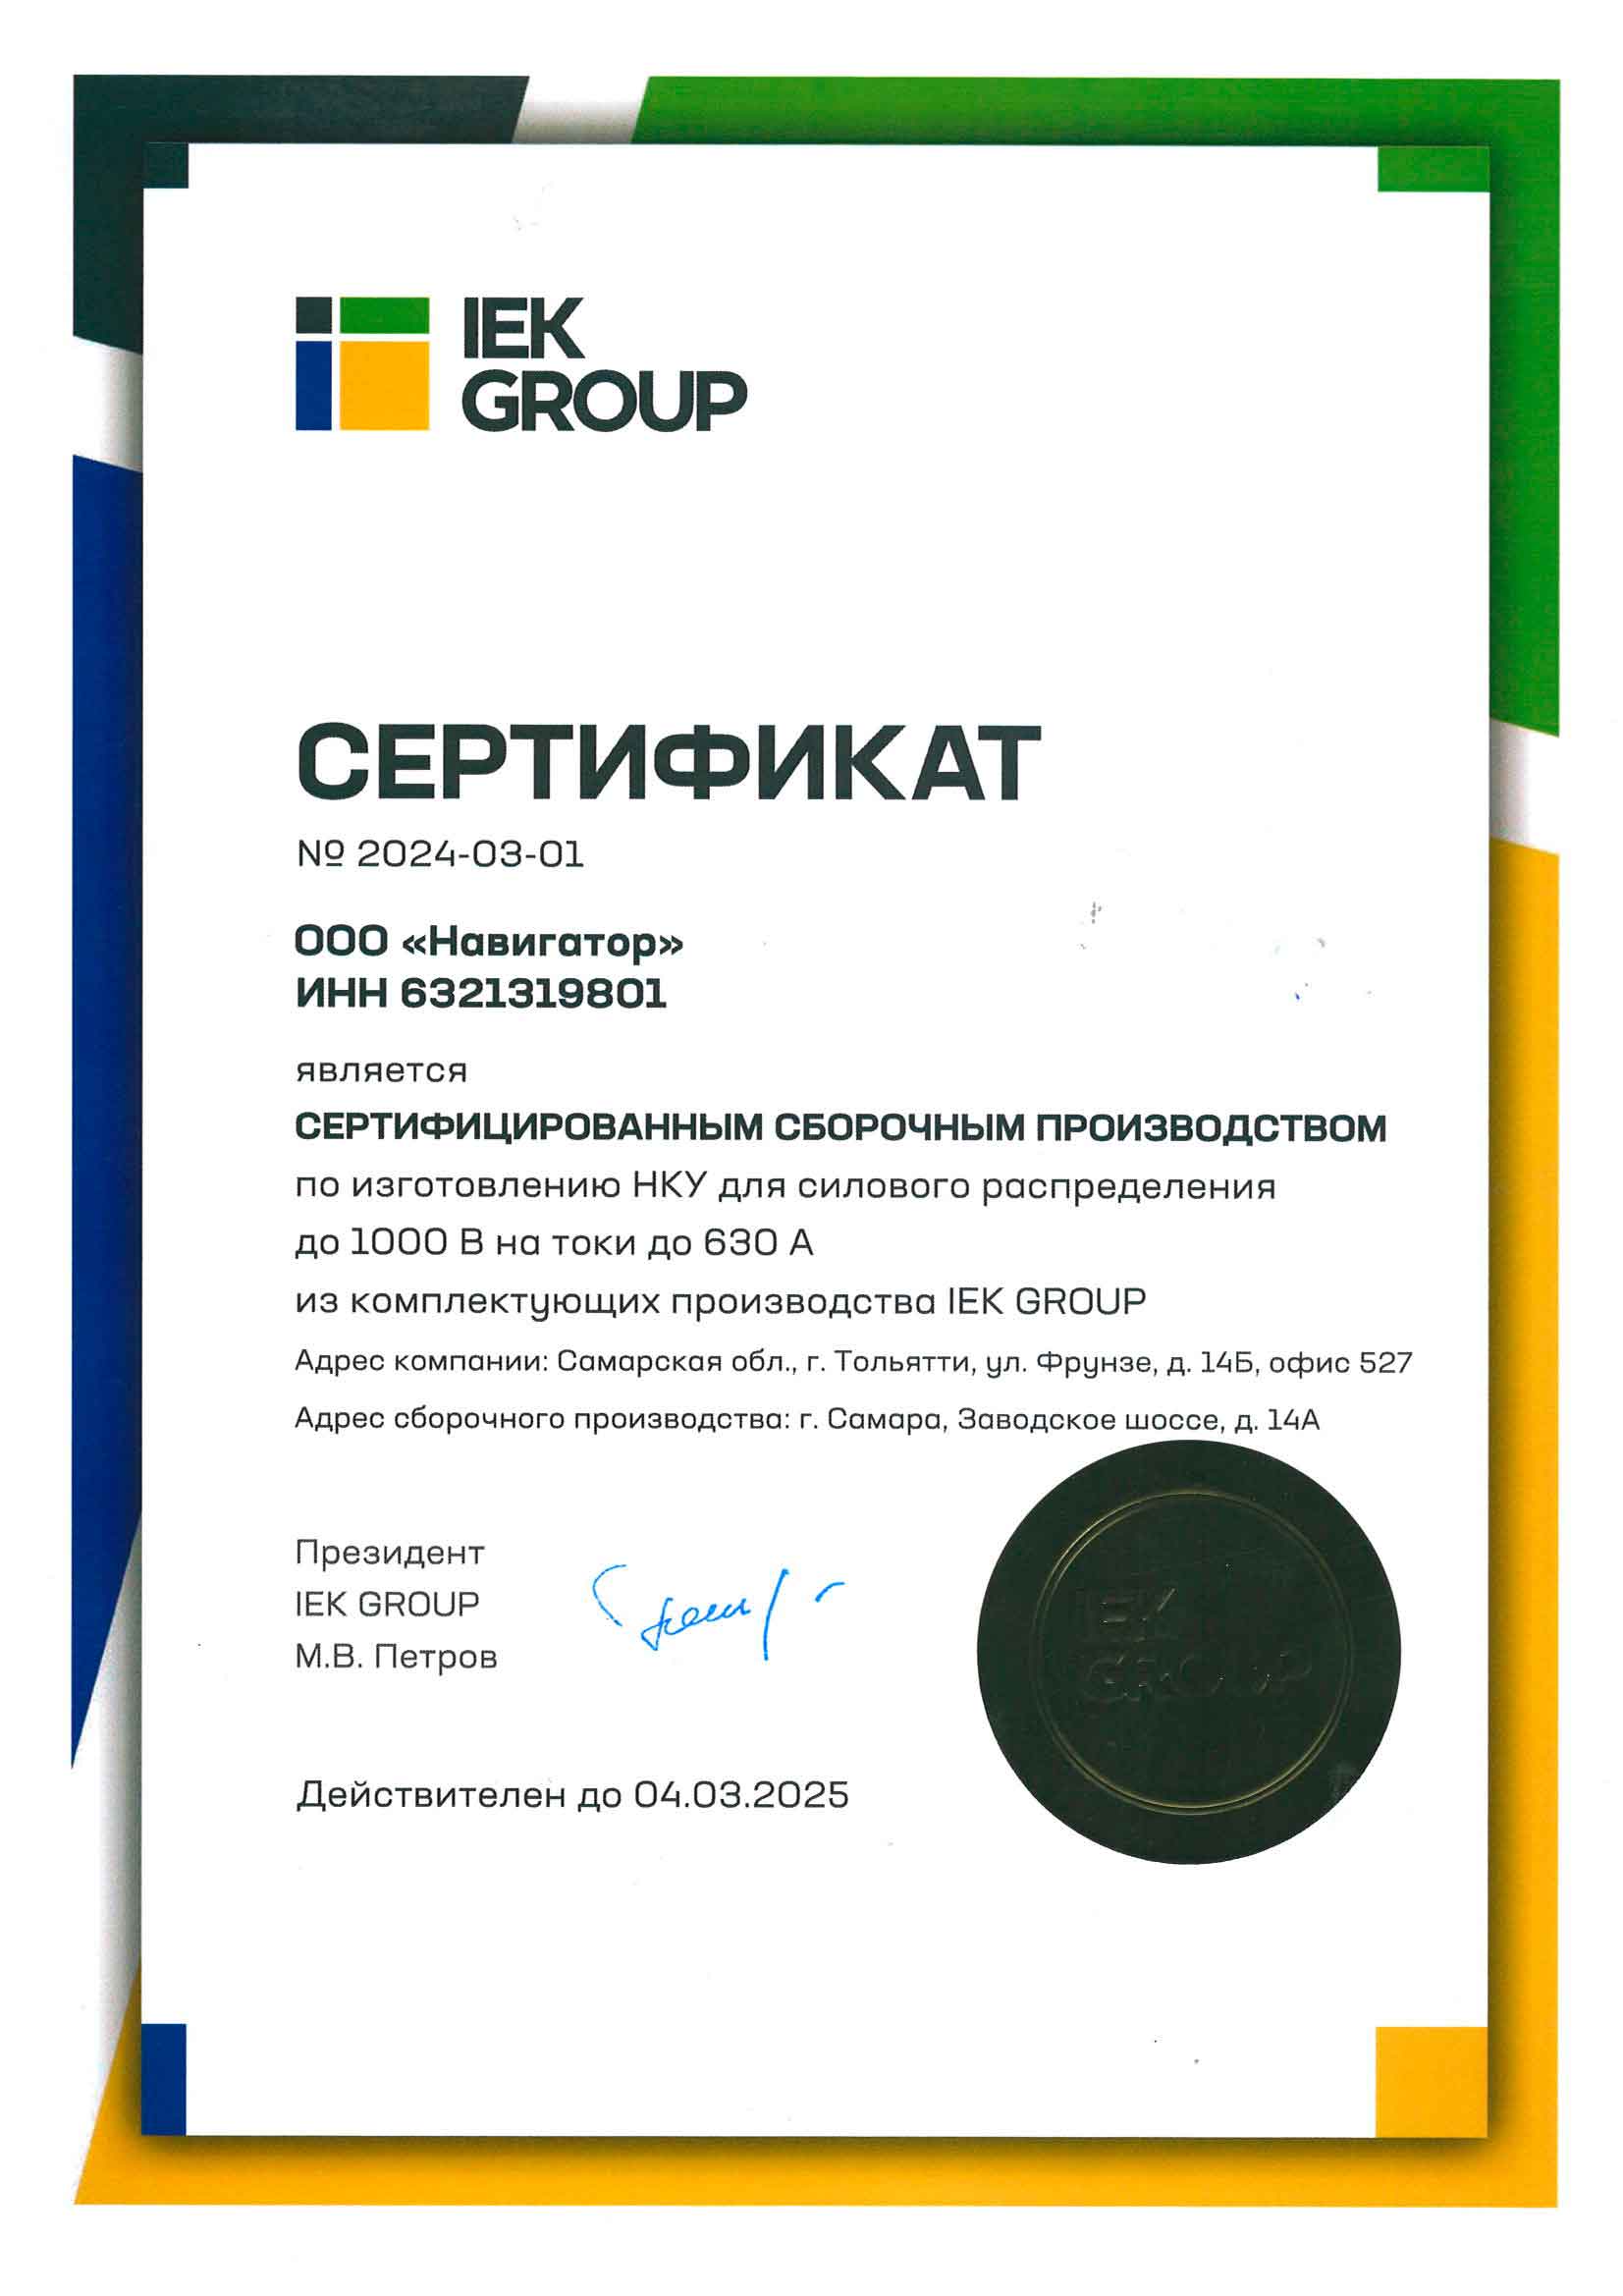 Сертификат IEK GROUP